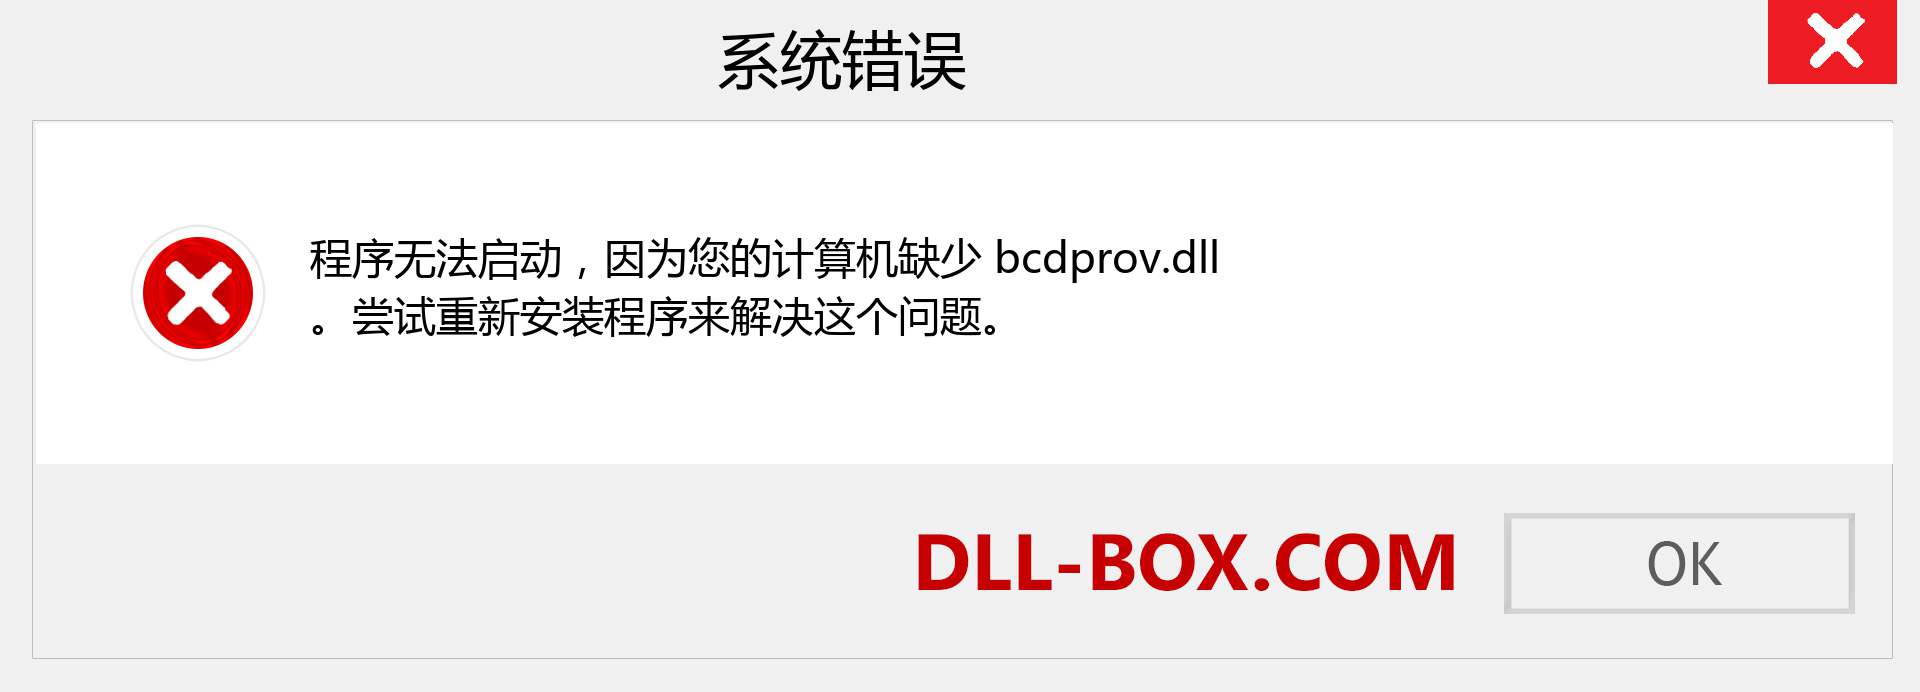 bcdprov.dll 文件丢失？。 适用于 Windows 7、8、10 的下载 - 修复 Windows、照片、图像上的 bcdprov dll 丢失错误